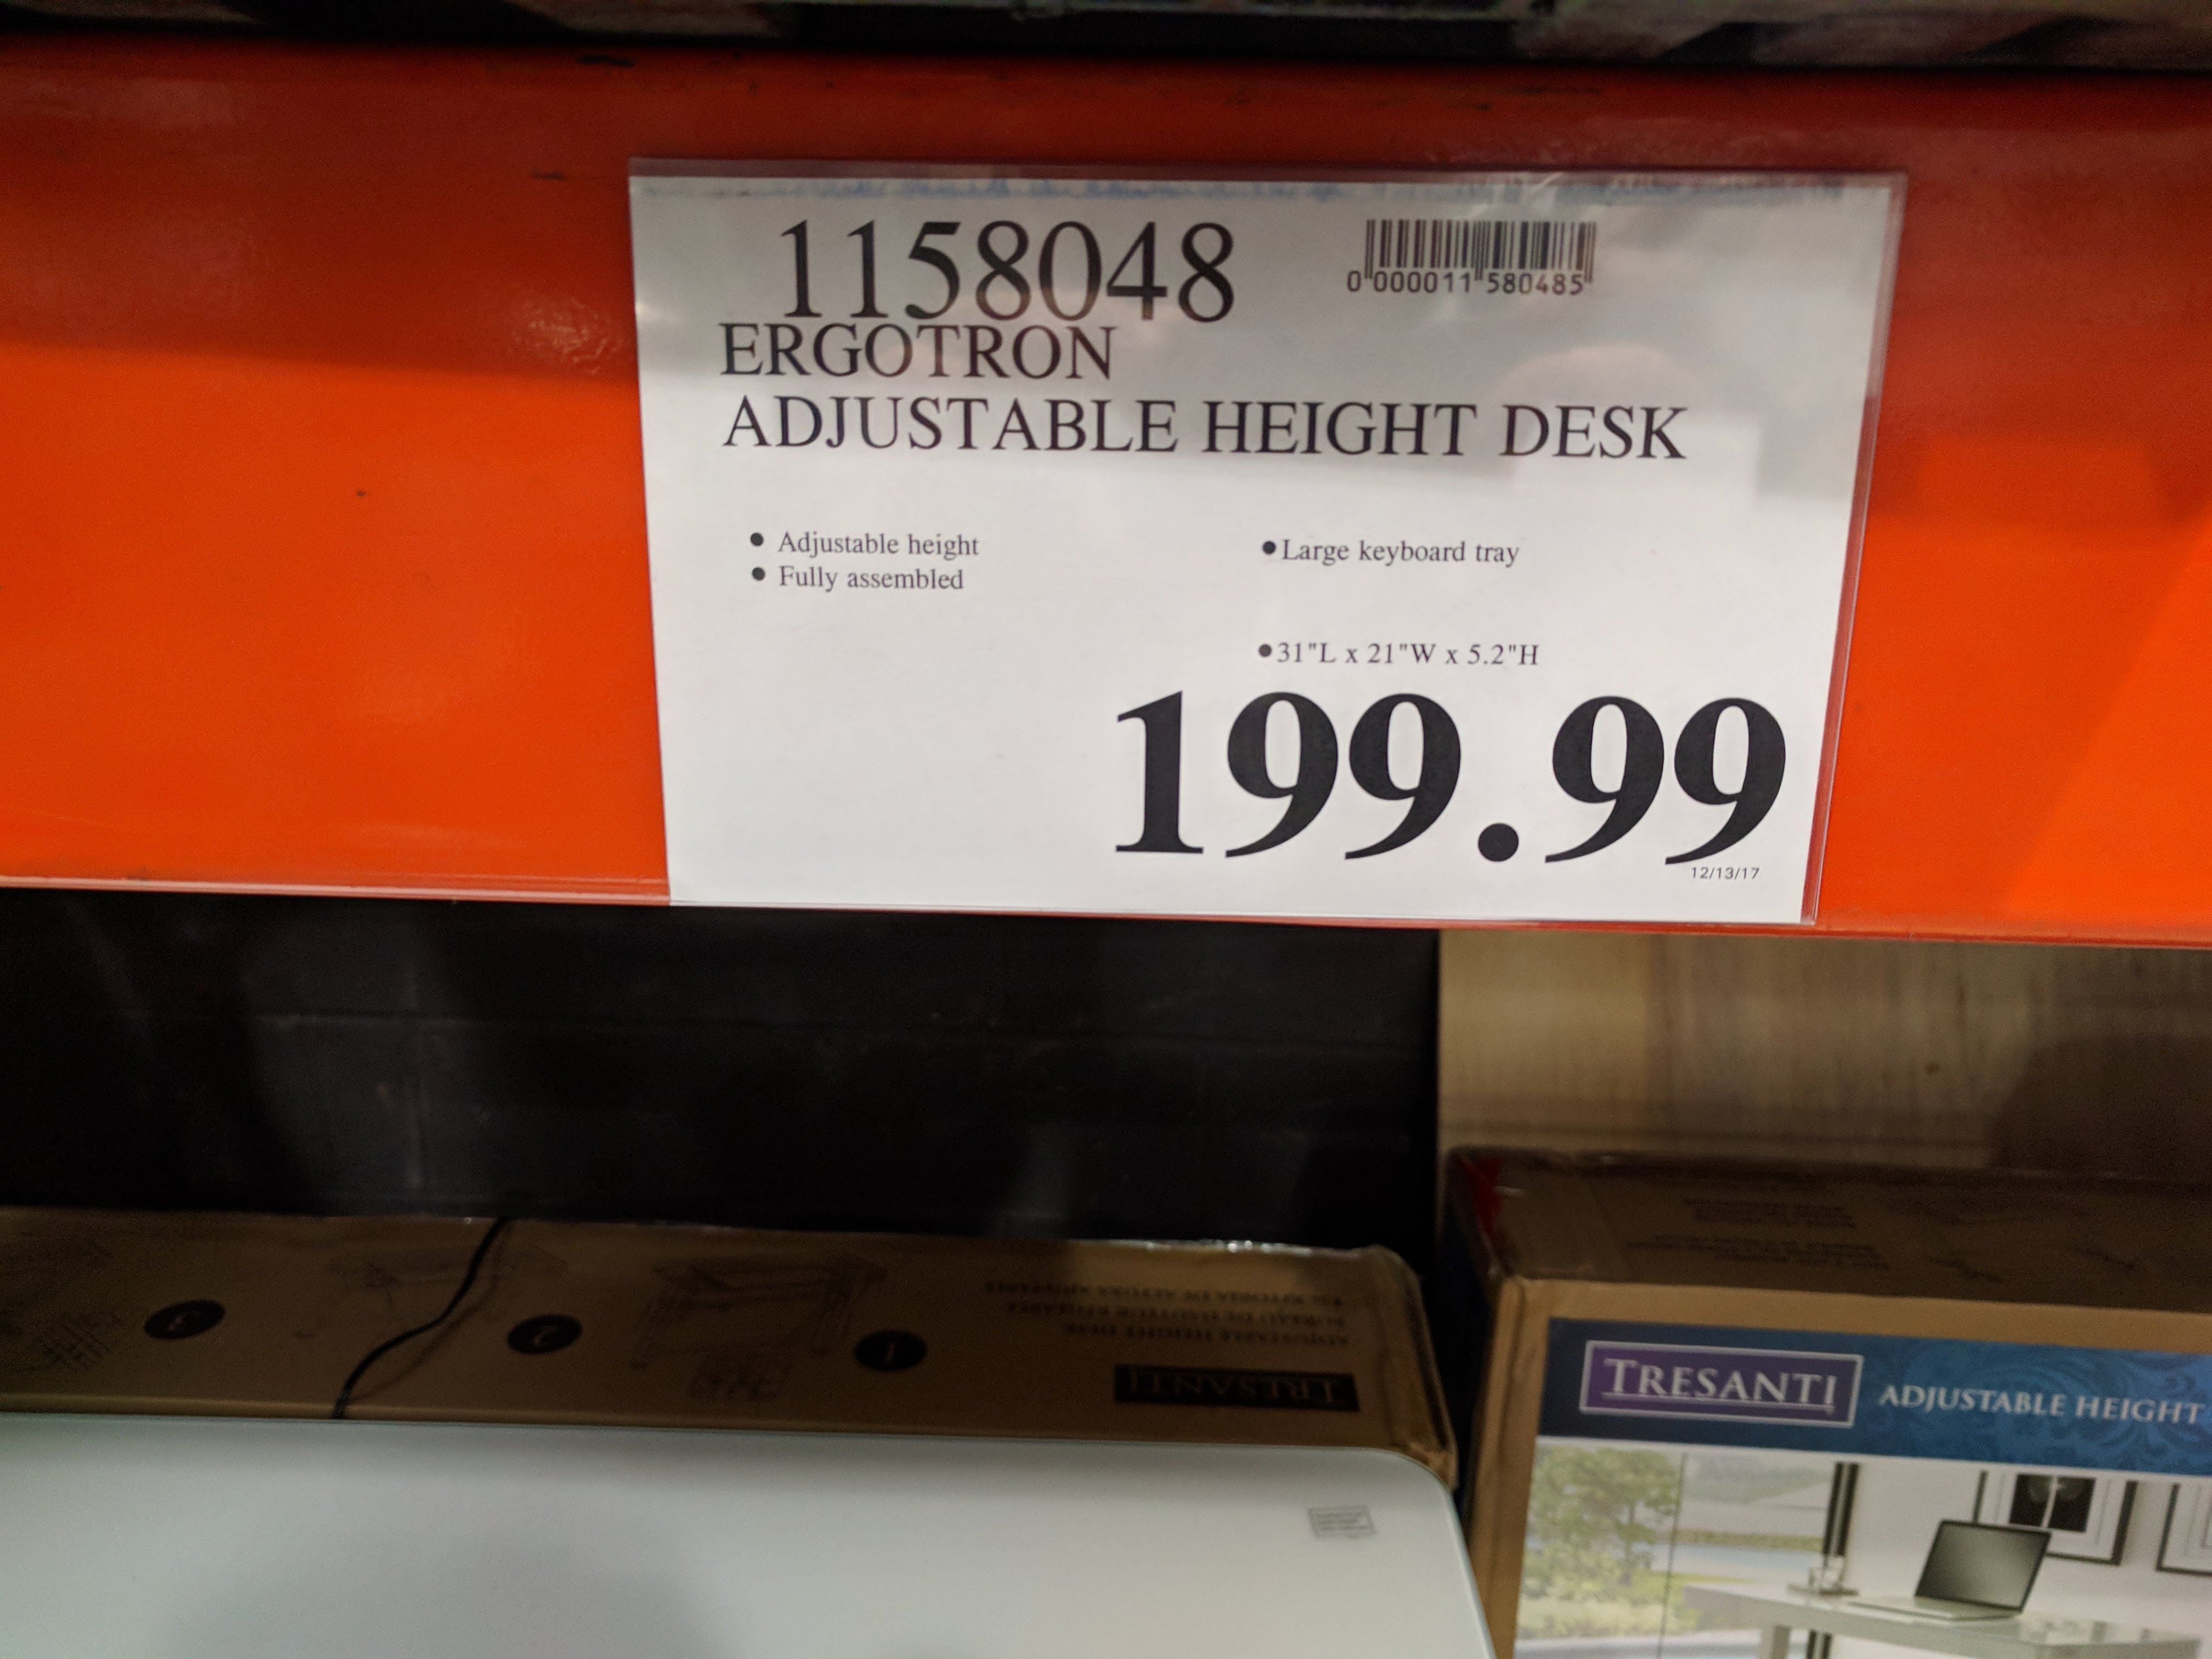 Tresanti adjustable height desk 199.99 at costco $199.99 ymmv